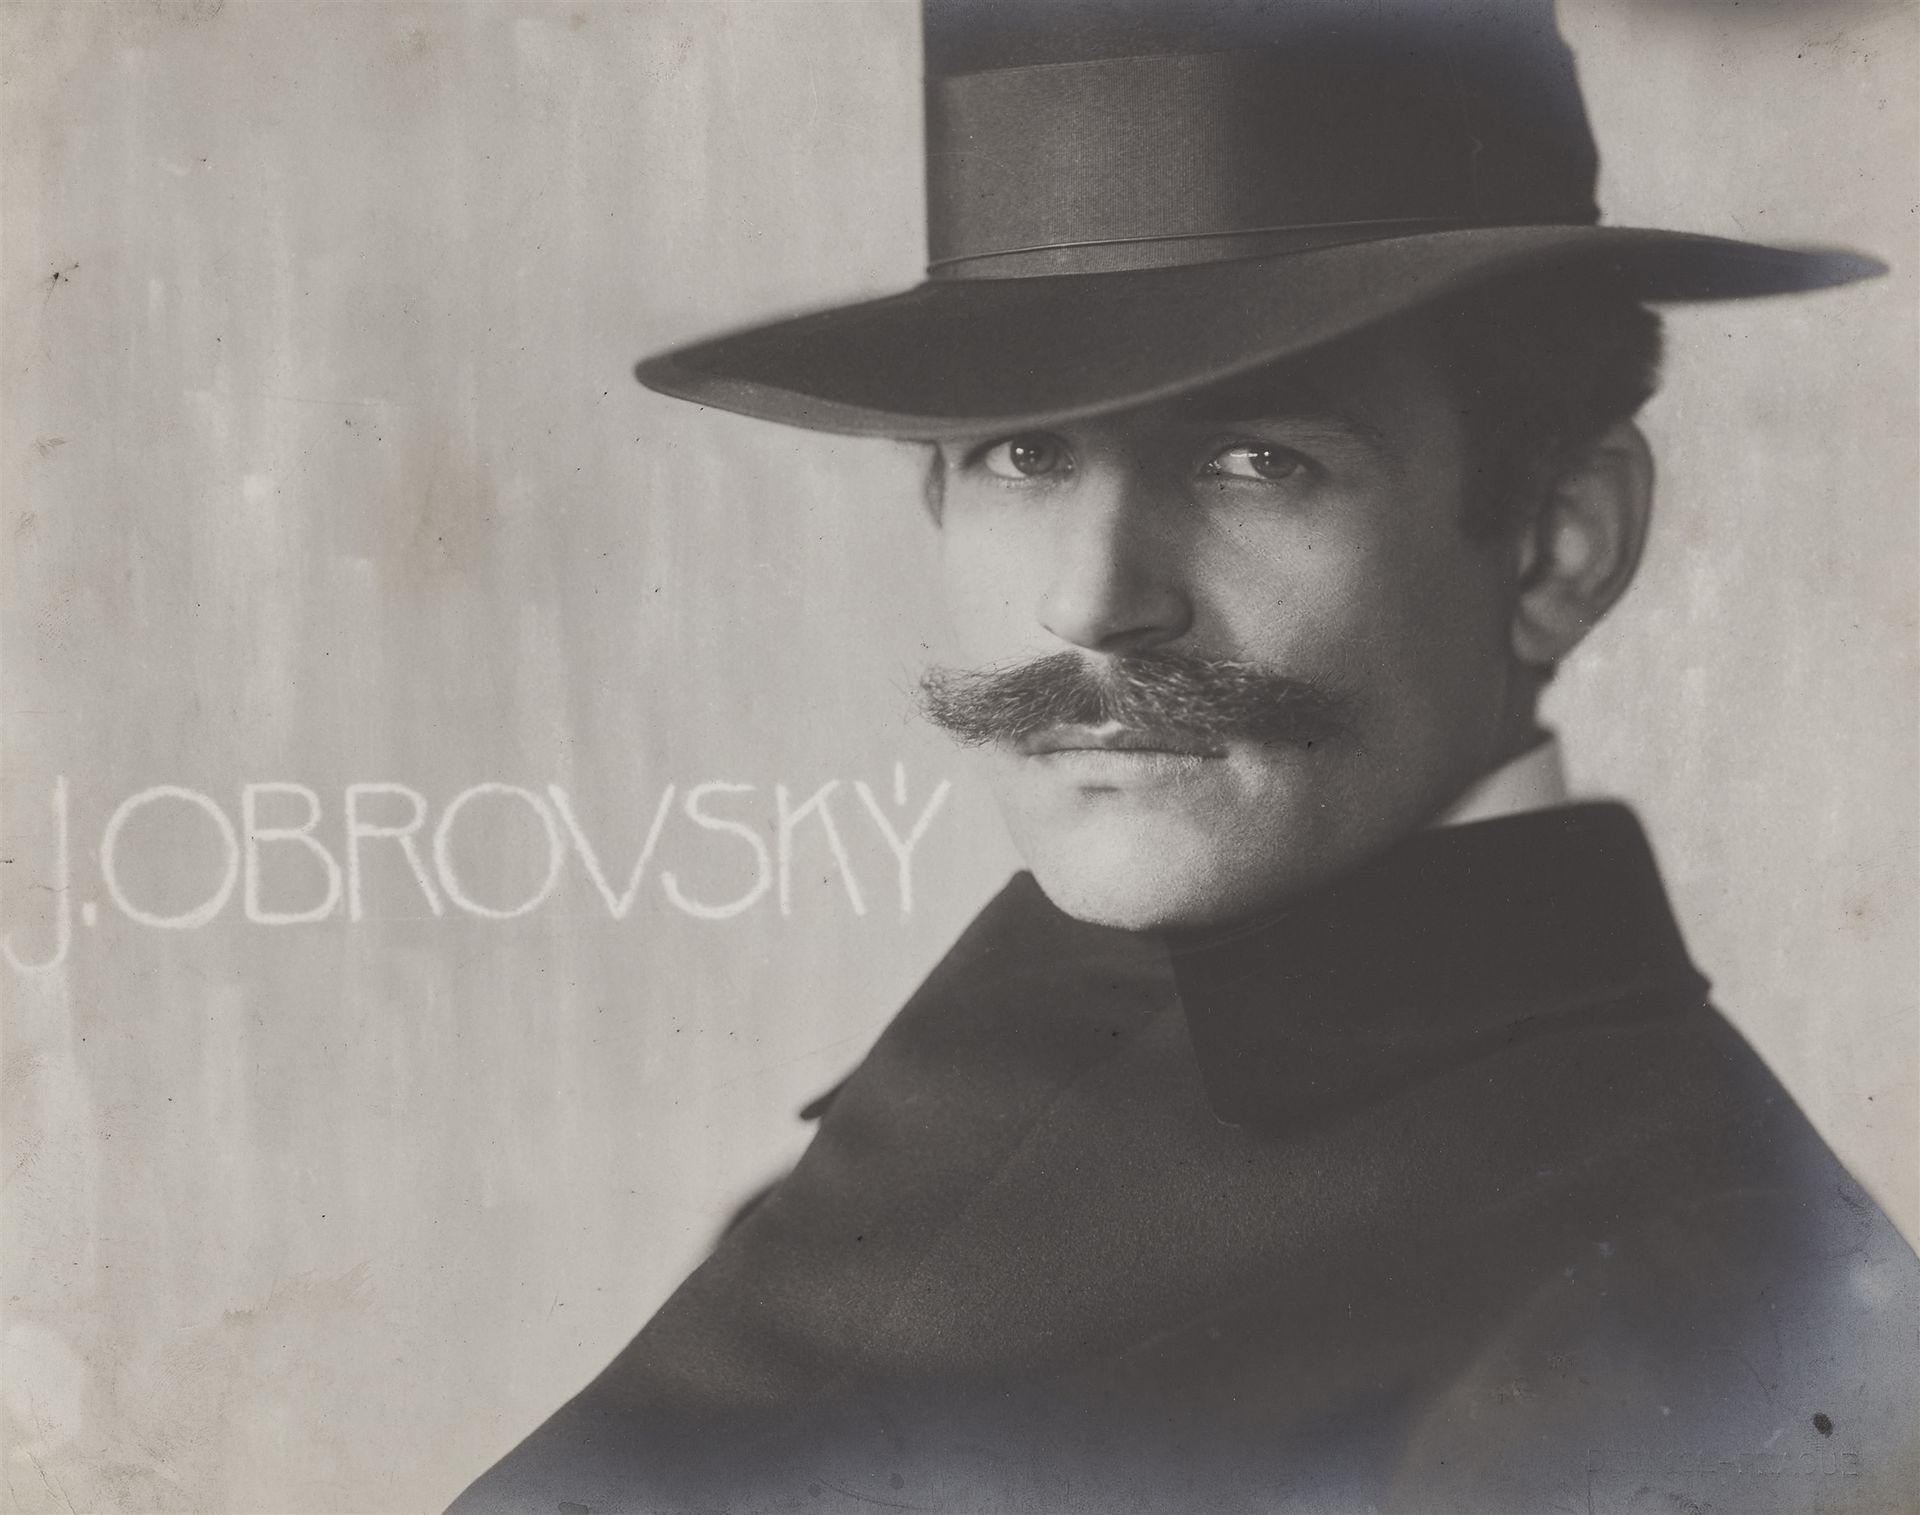 František Drtikol František Drtikol



Portrait du peintre Jakub Obrovský

1913
&hellip;